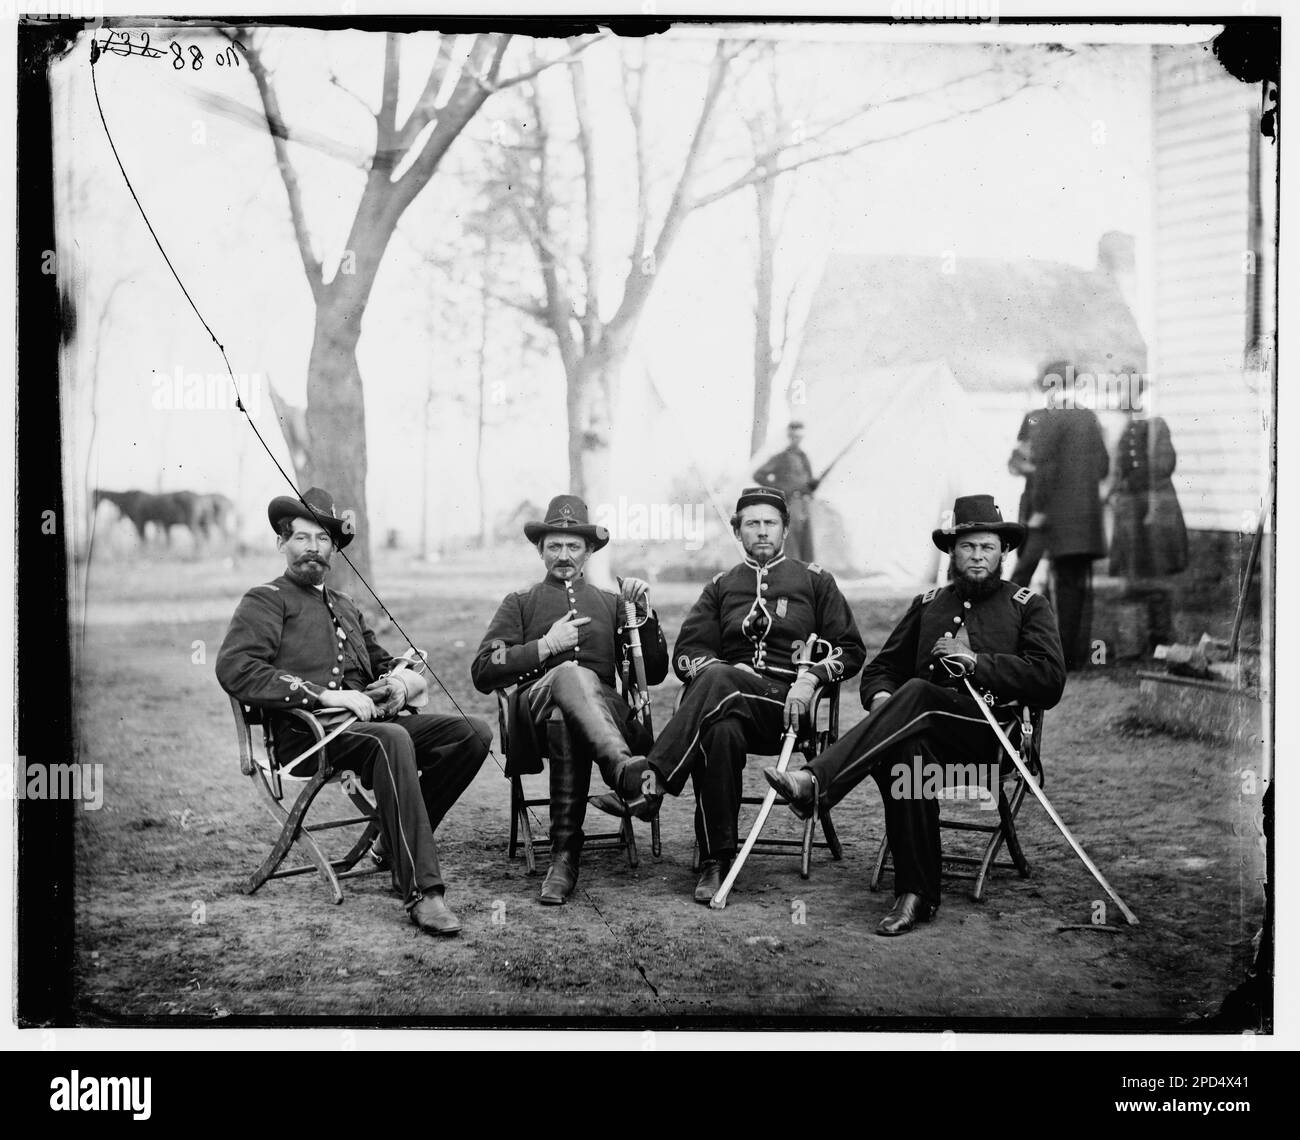 Brandy Station, Virginia. Marschall des 3D. Armeekorps. Bürgerkriegsfotos, 1861-1865. Usa, Geschichte, Bürgerkrieg, 1861-1865. Stockfoto